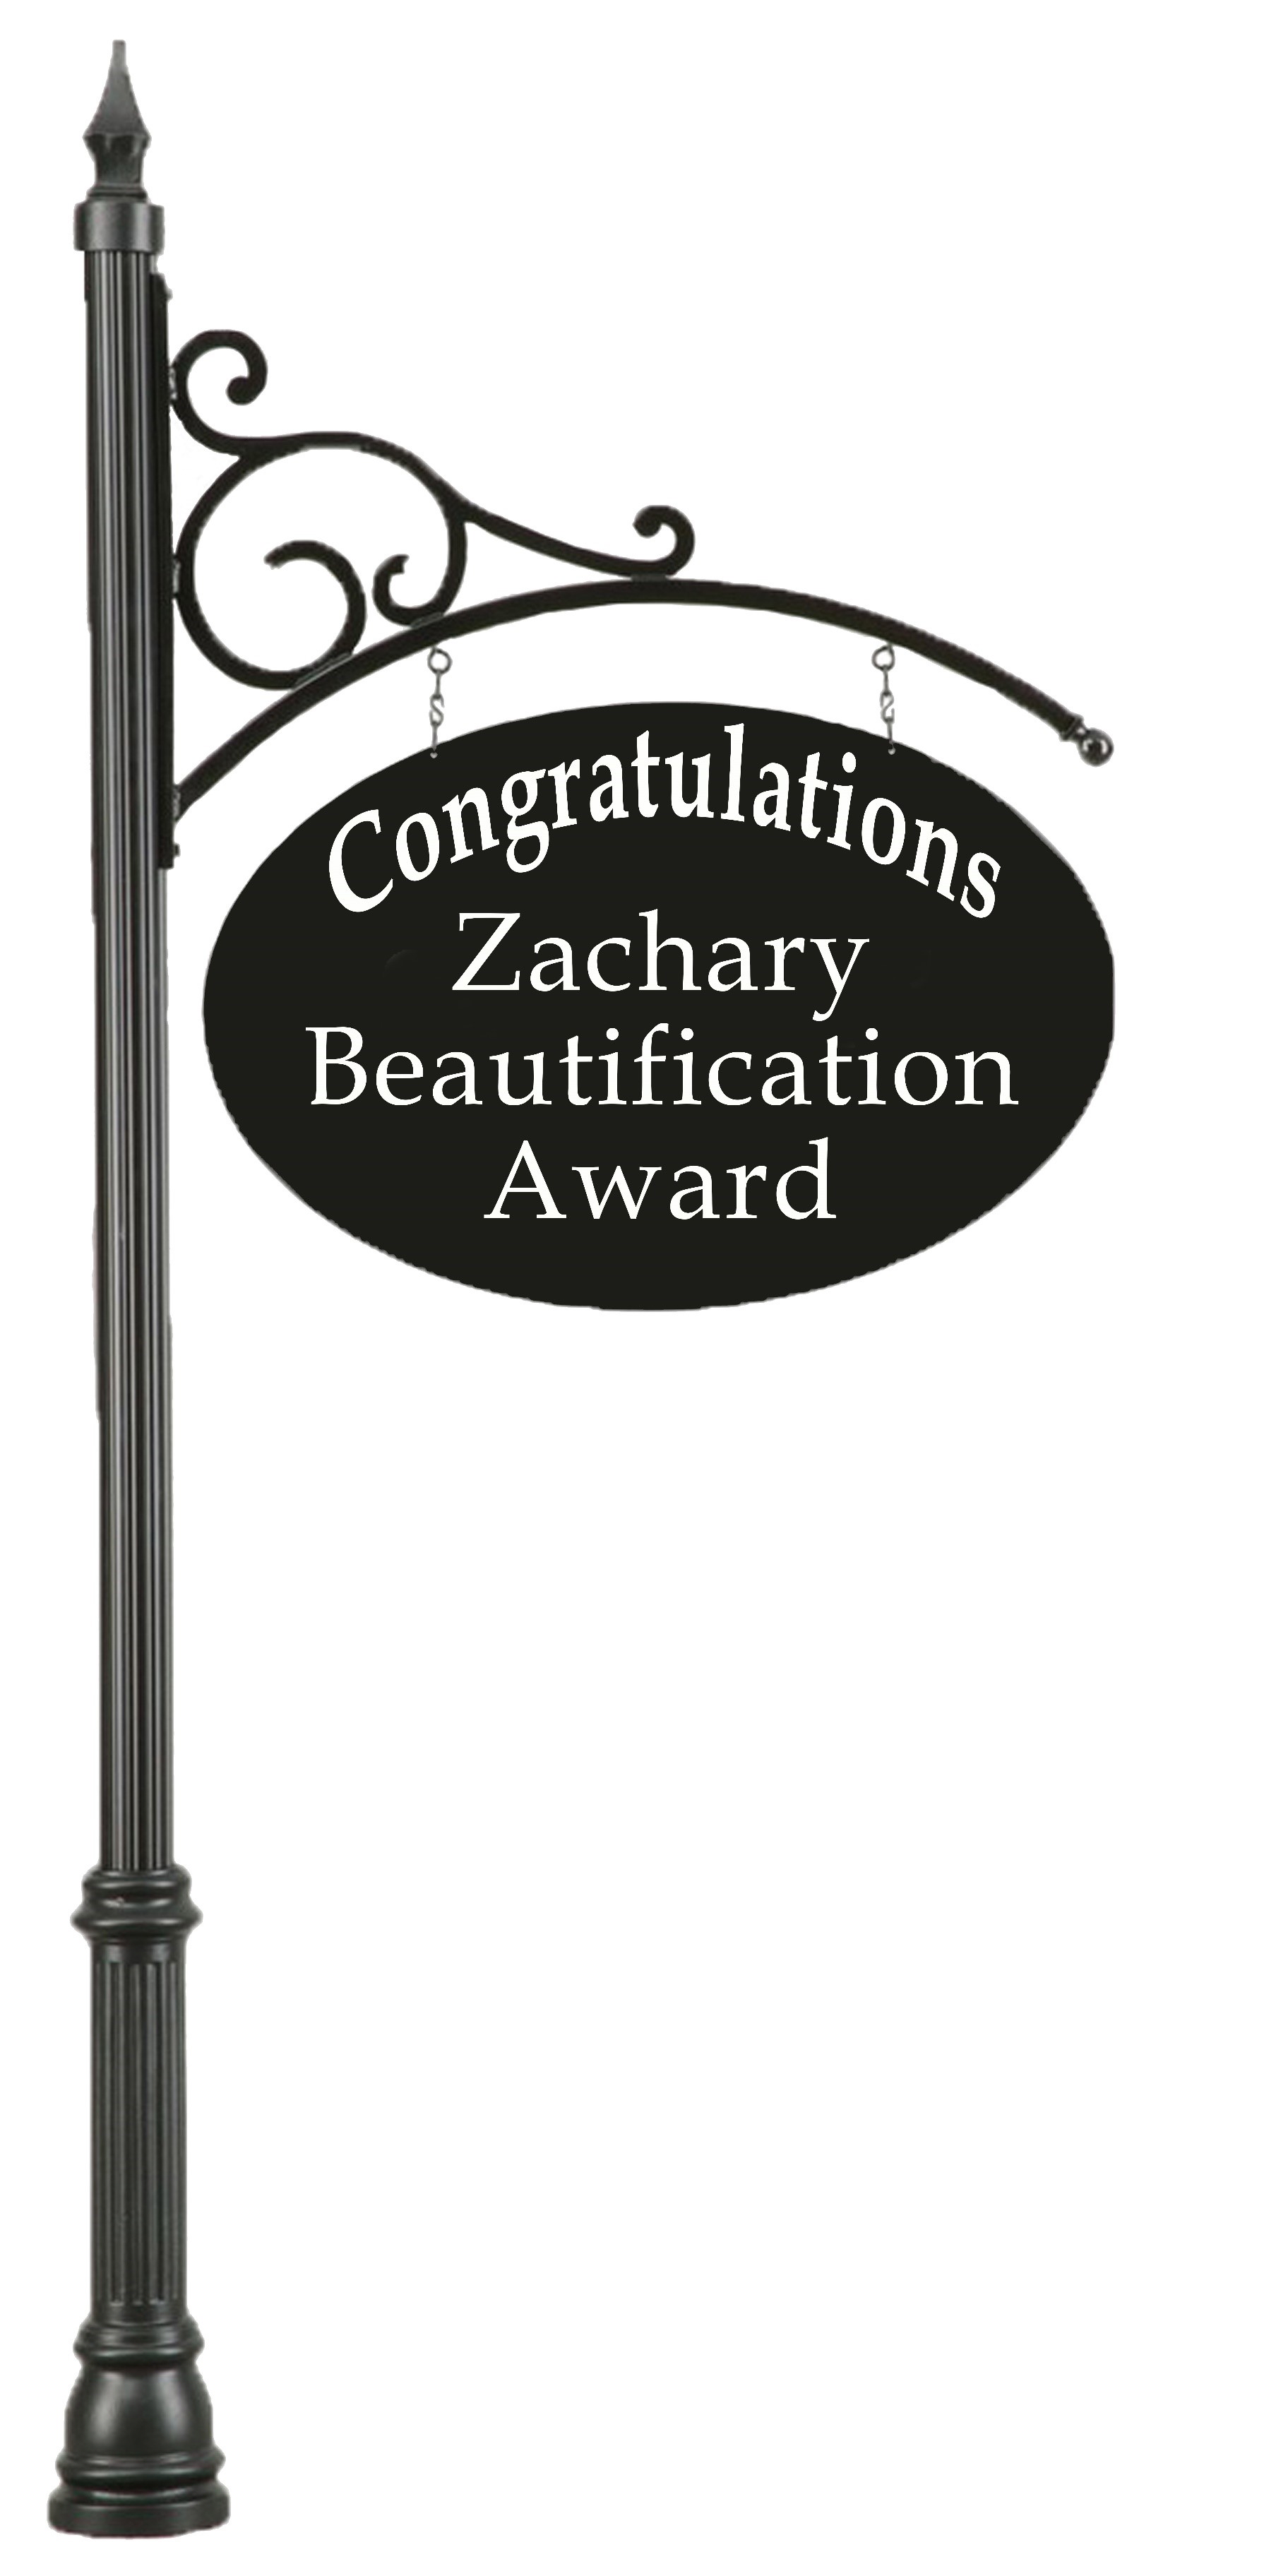 City of Zachary Seeking Nominations for Community Beautification Business Award